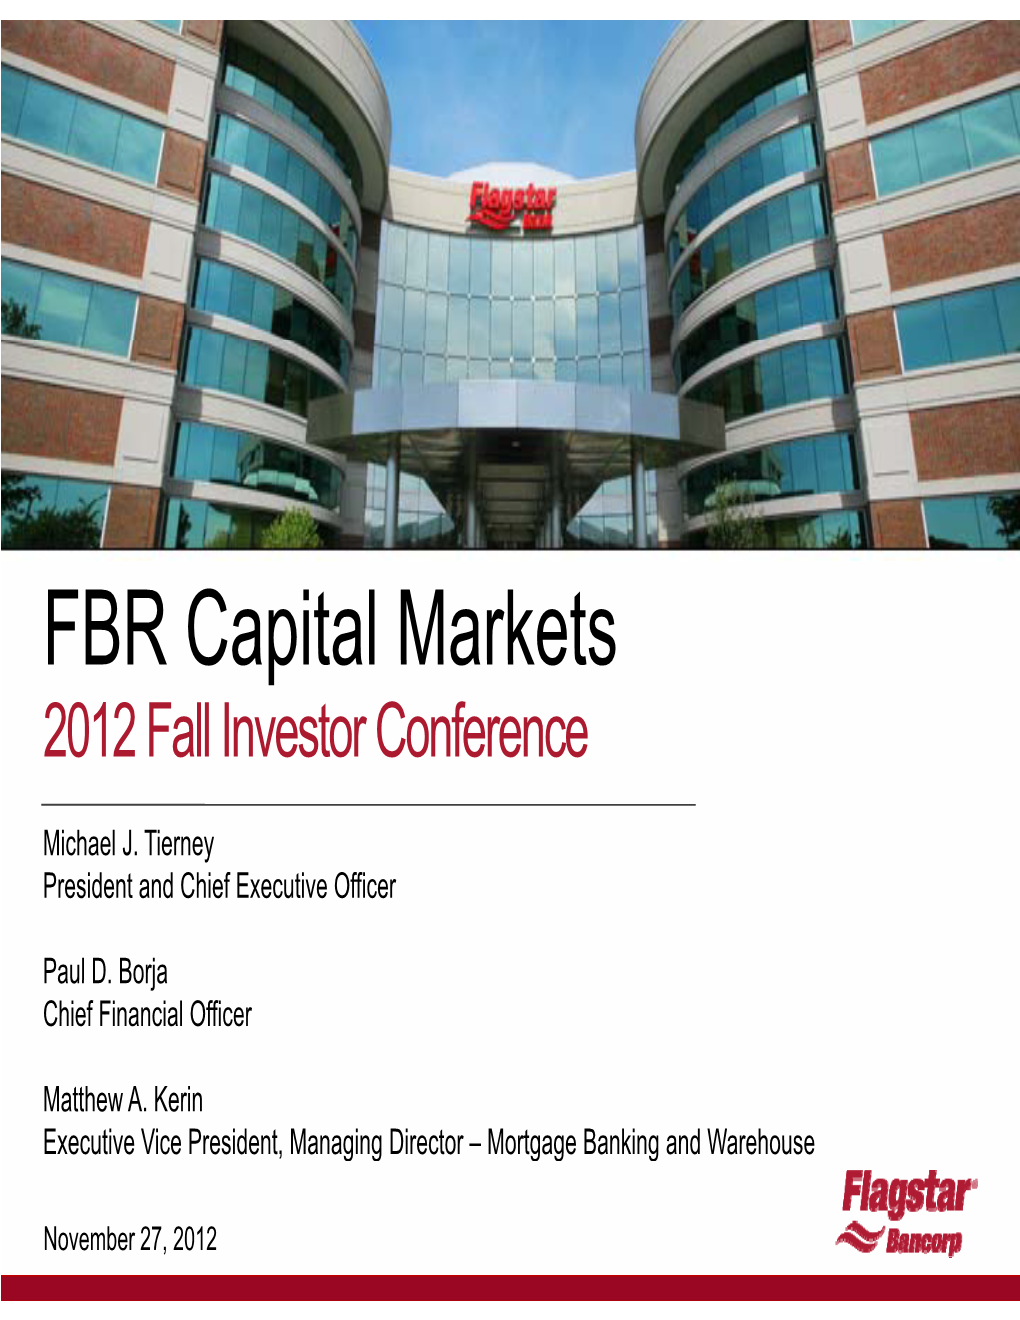 FBR Capital Markets Conference Presentation